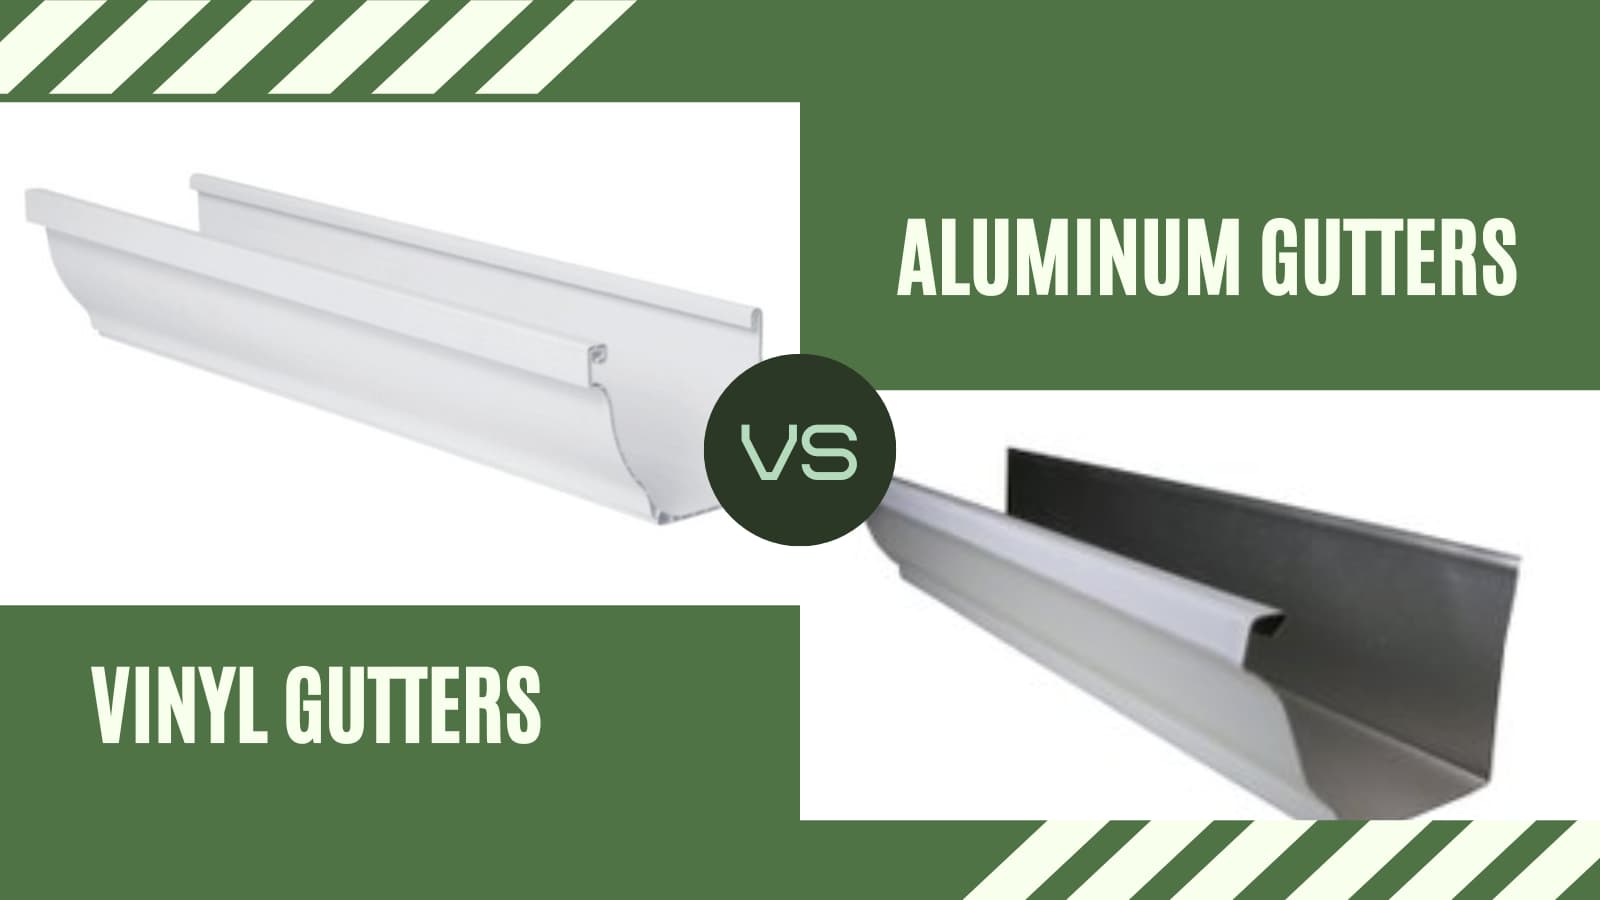 Vinyl or Aluminum Gutters